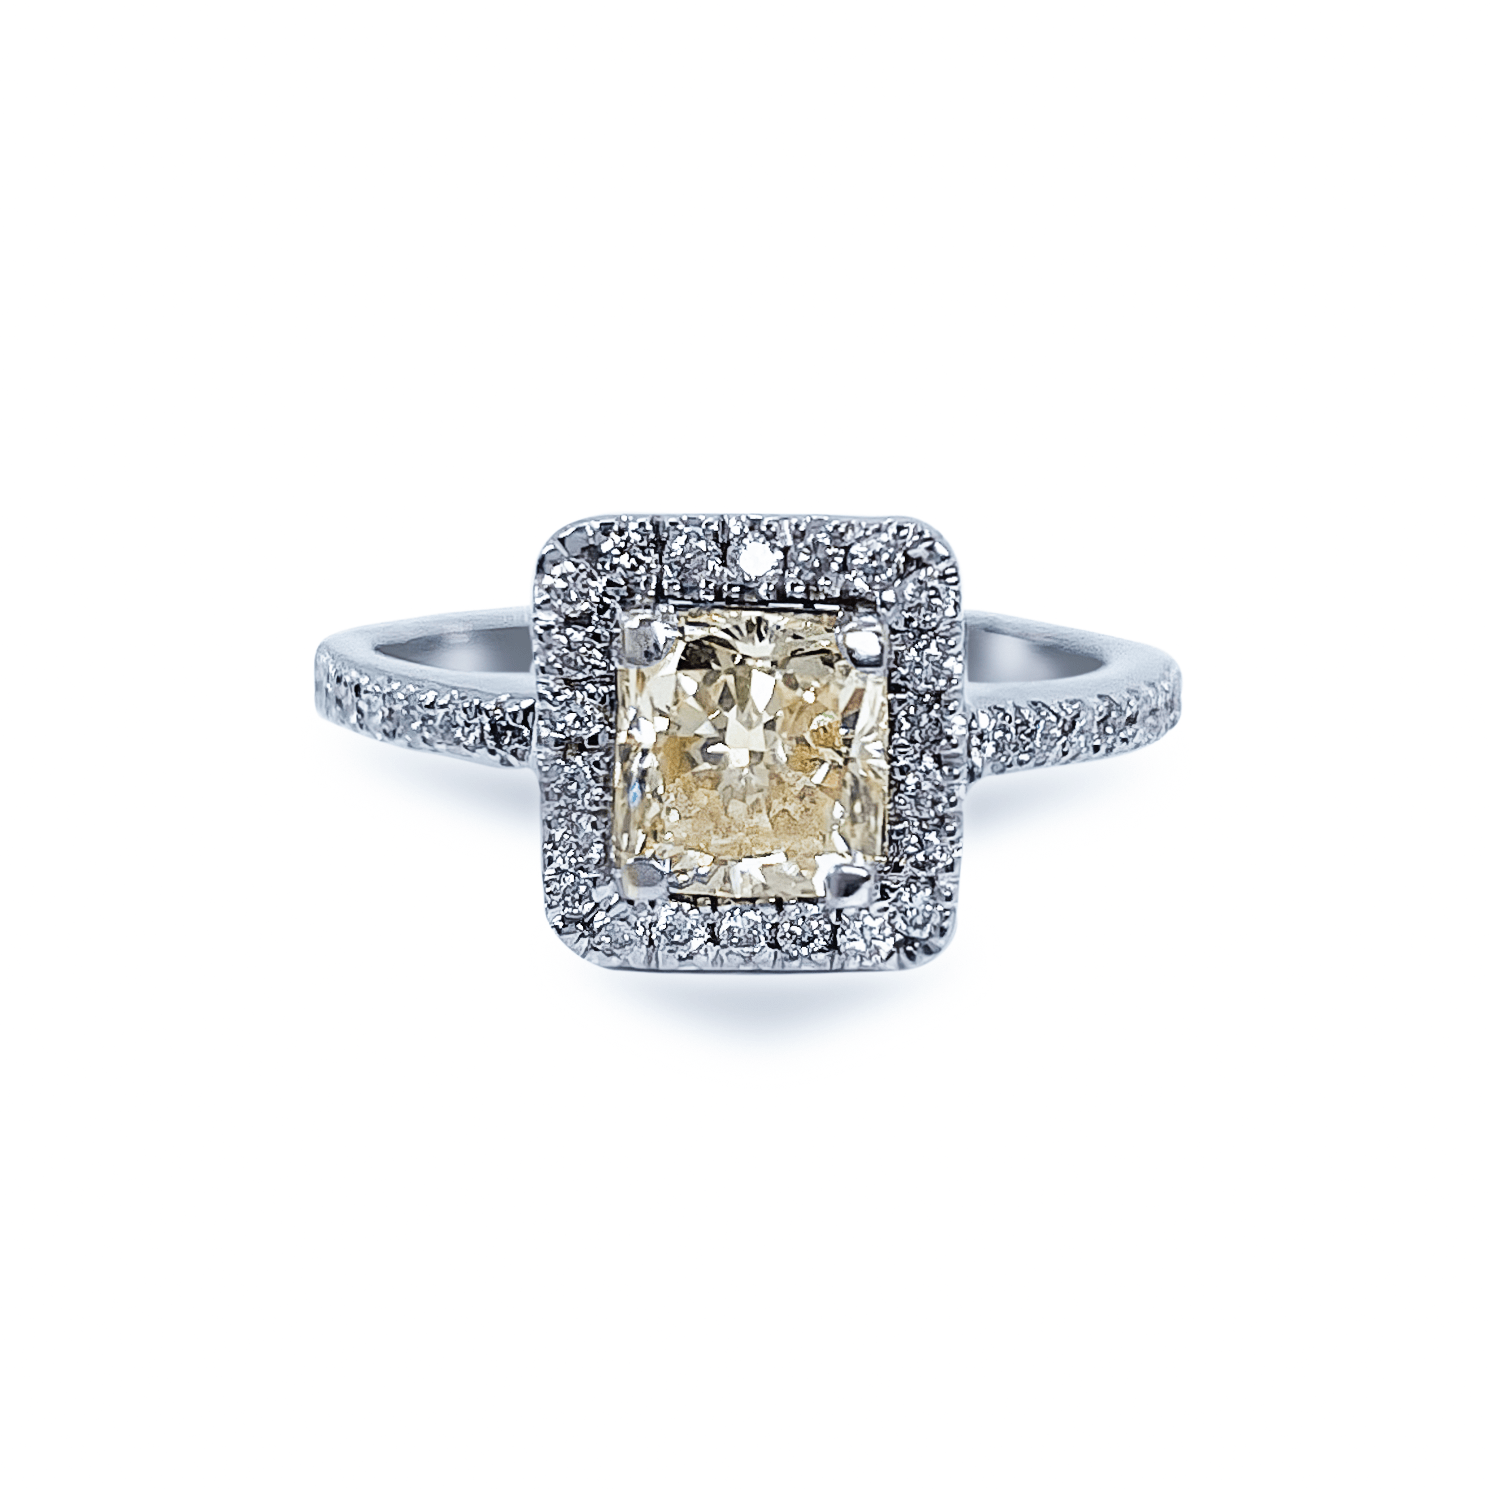 1.09 ct Light Yellow Cushion Cut Diamond Ring with Diamond Halo in 18k White Gold- جرس - Luxury Diamond Jewelry shop Dubai - SABA DIAMONDS